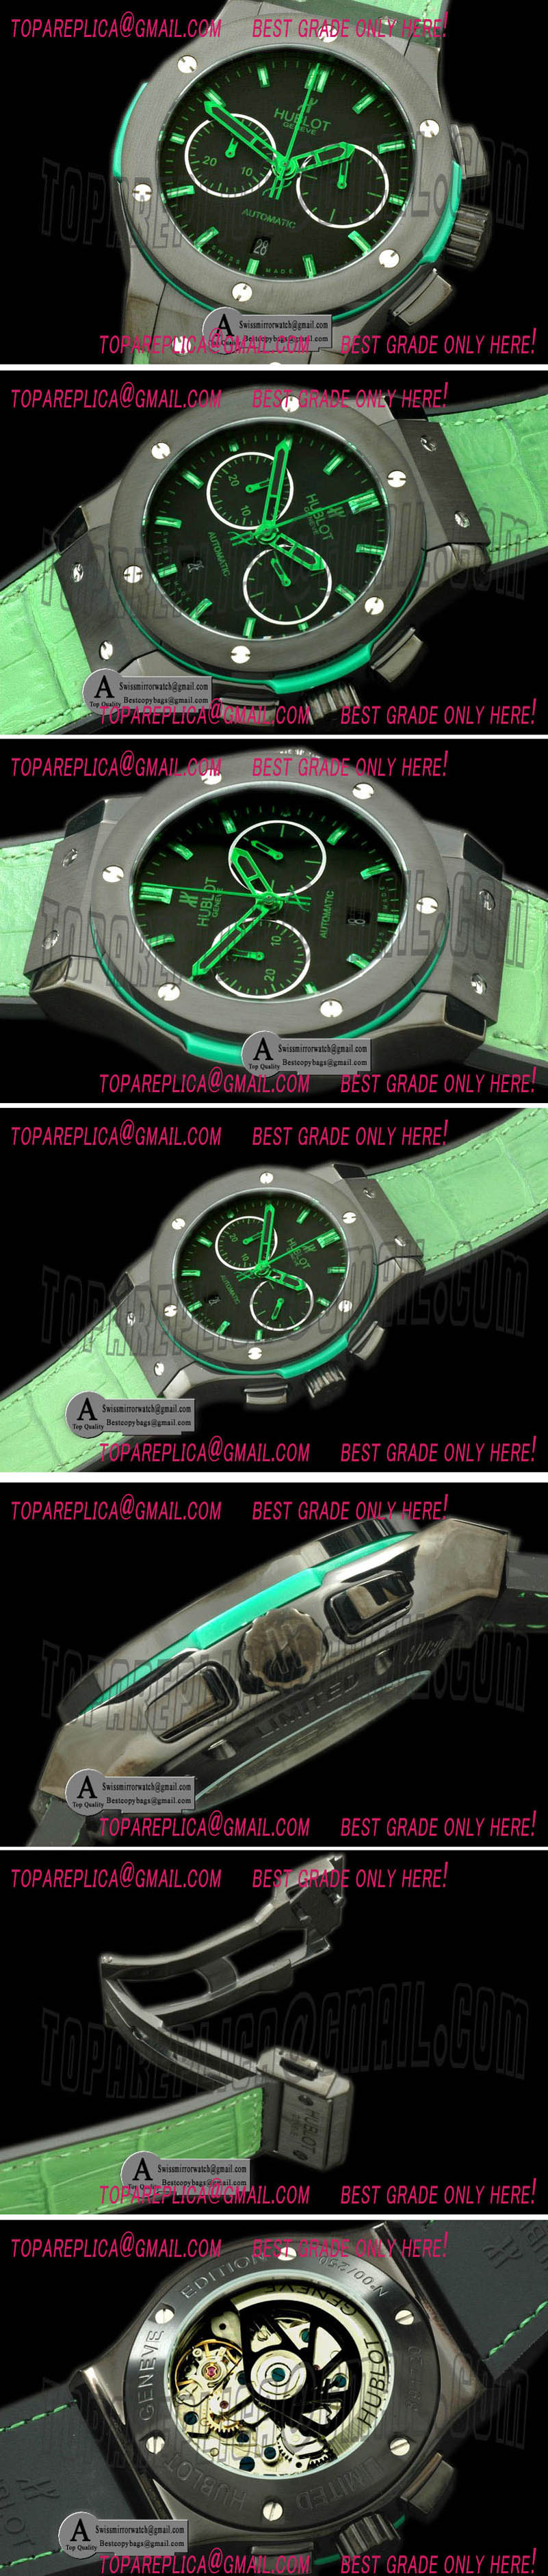 Hublot Classic Fusion Chrono V2 PVD Leather All Black Green A 7750 Replica Watches